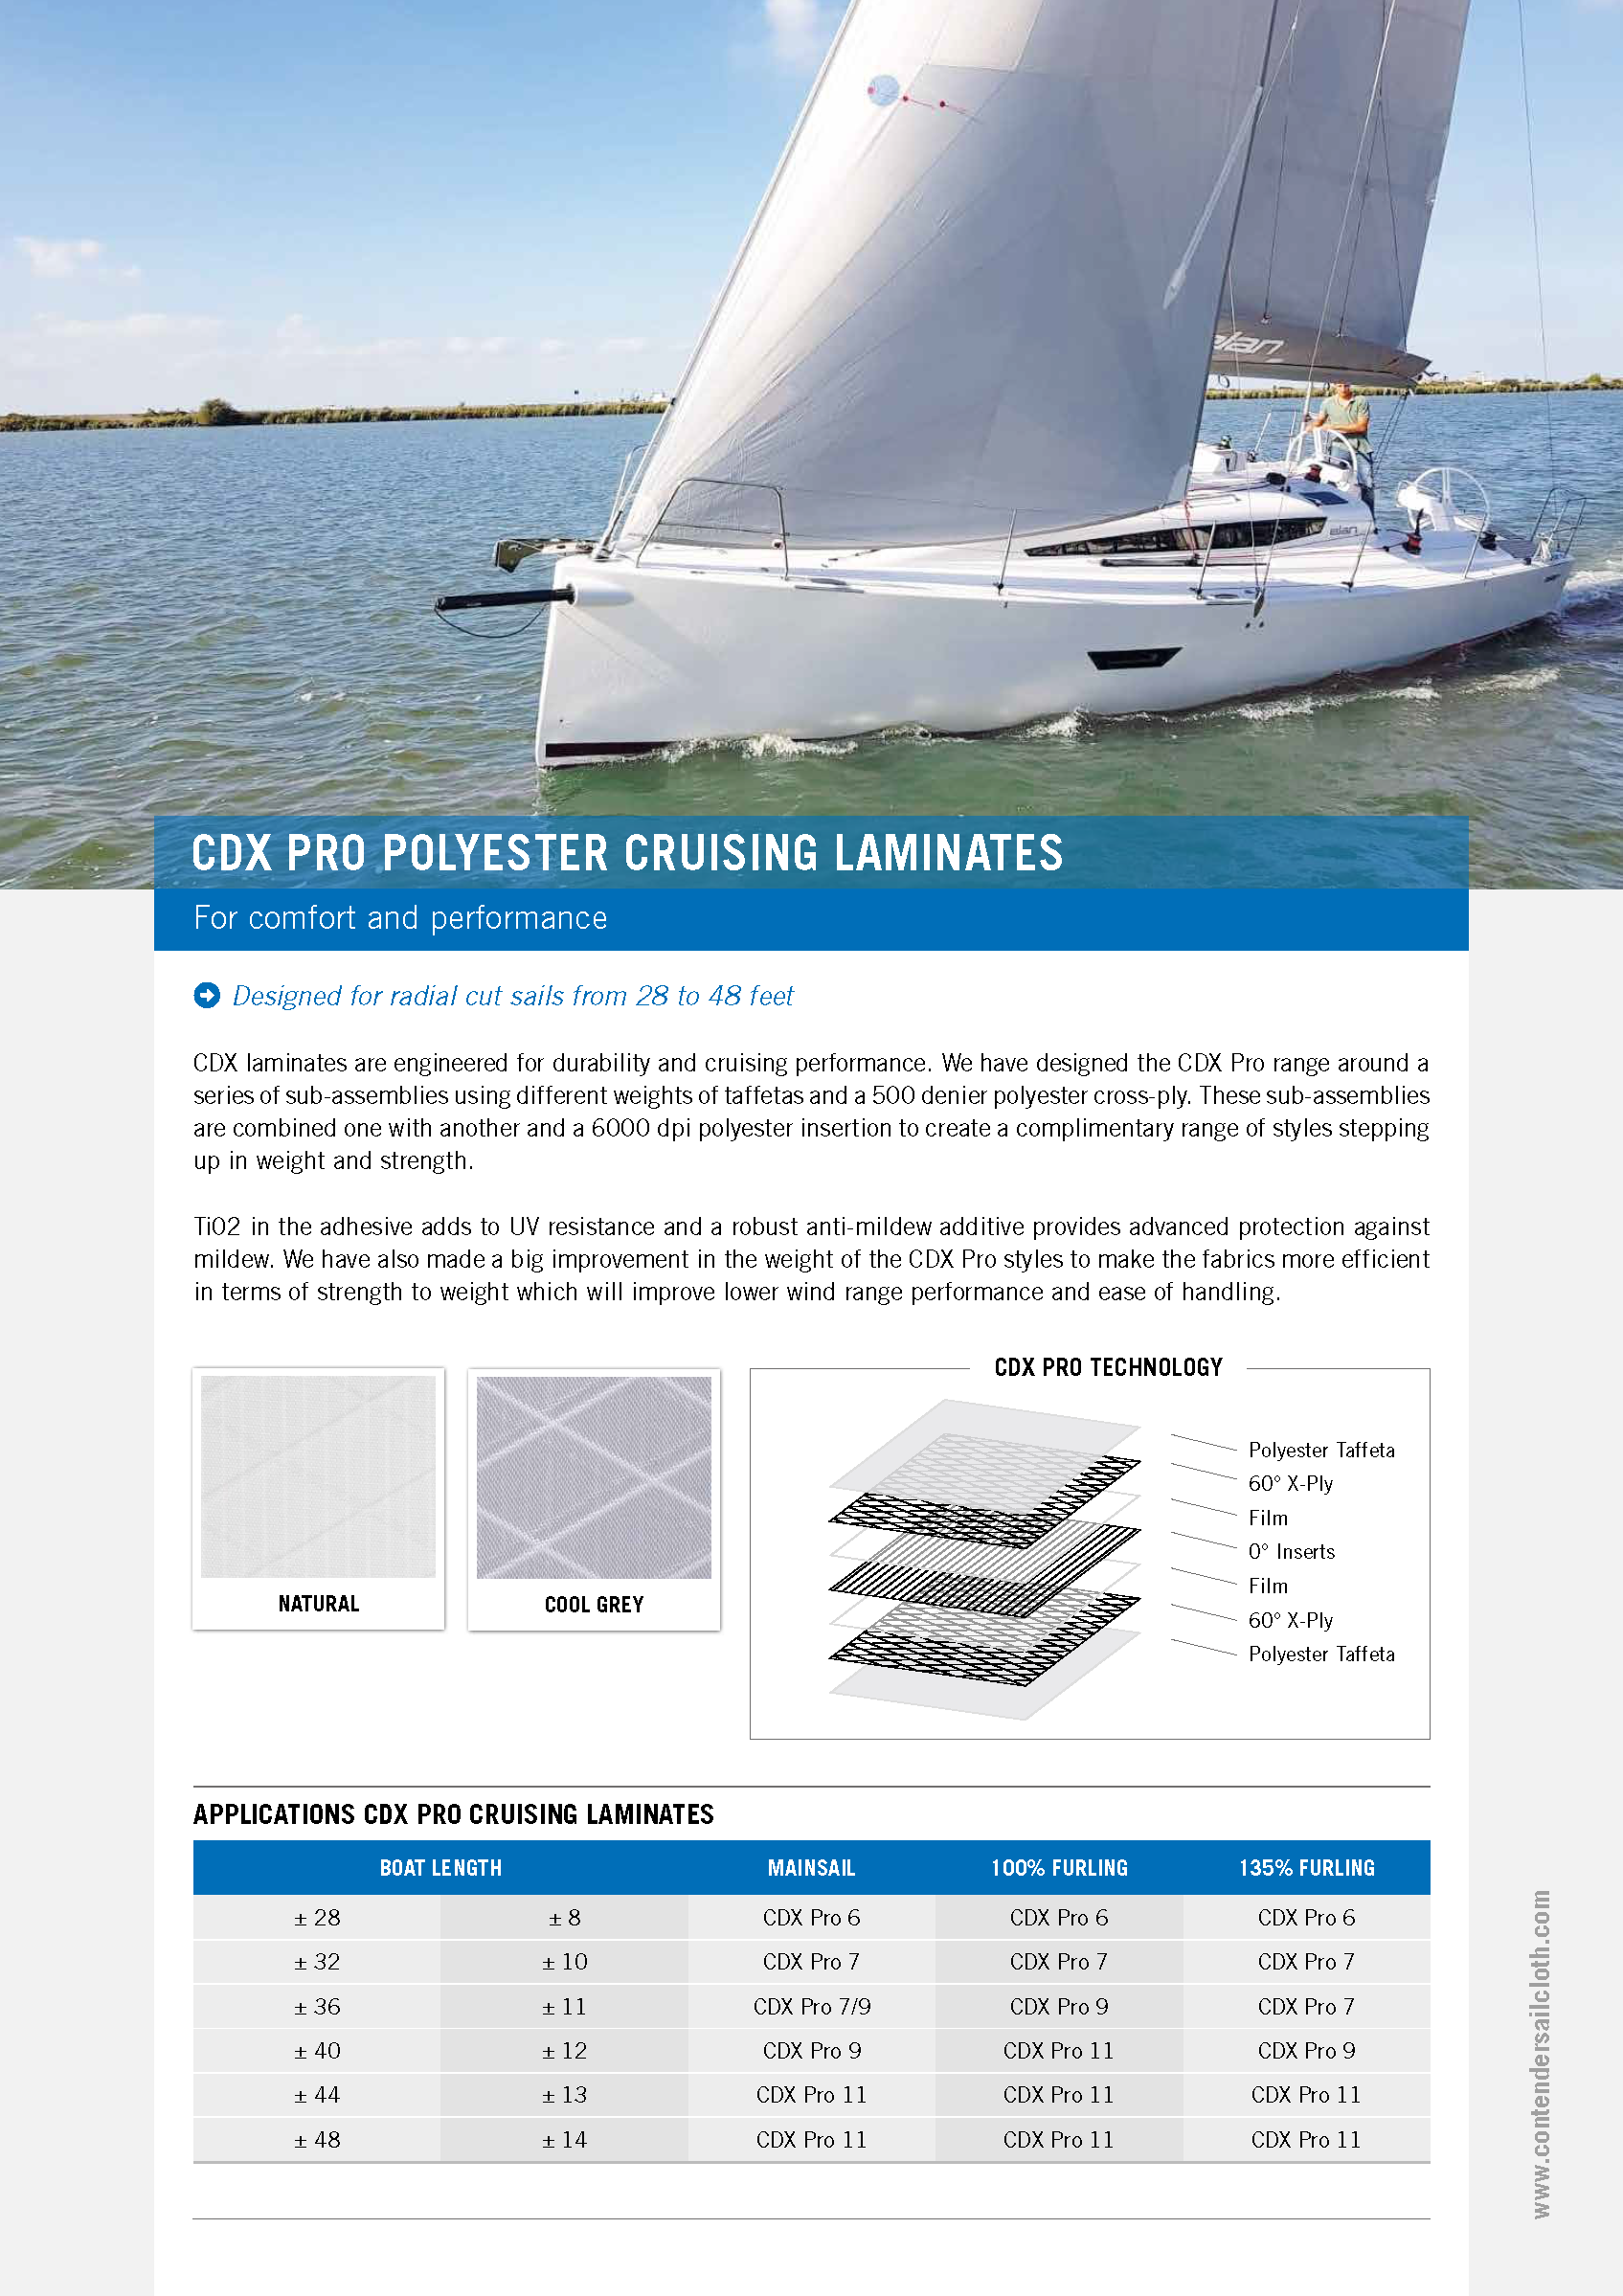 CDX Pro Polyester Cruising Laminates